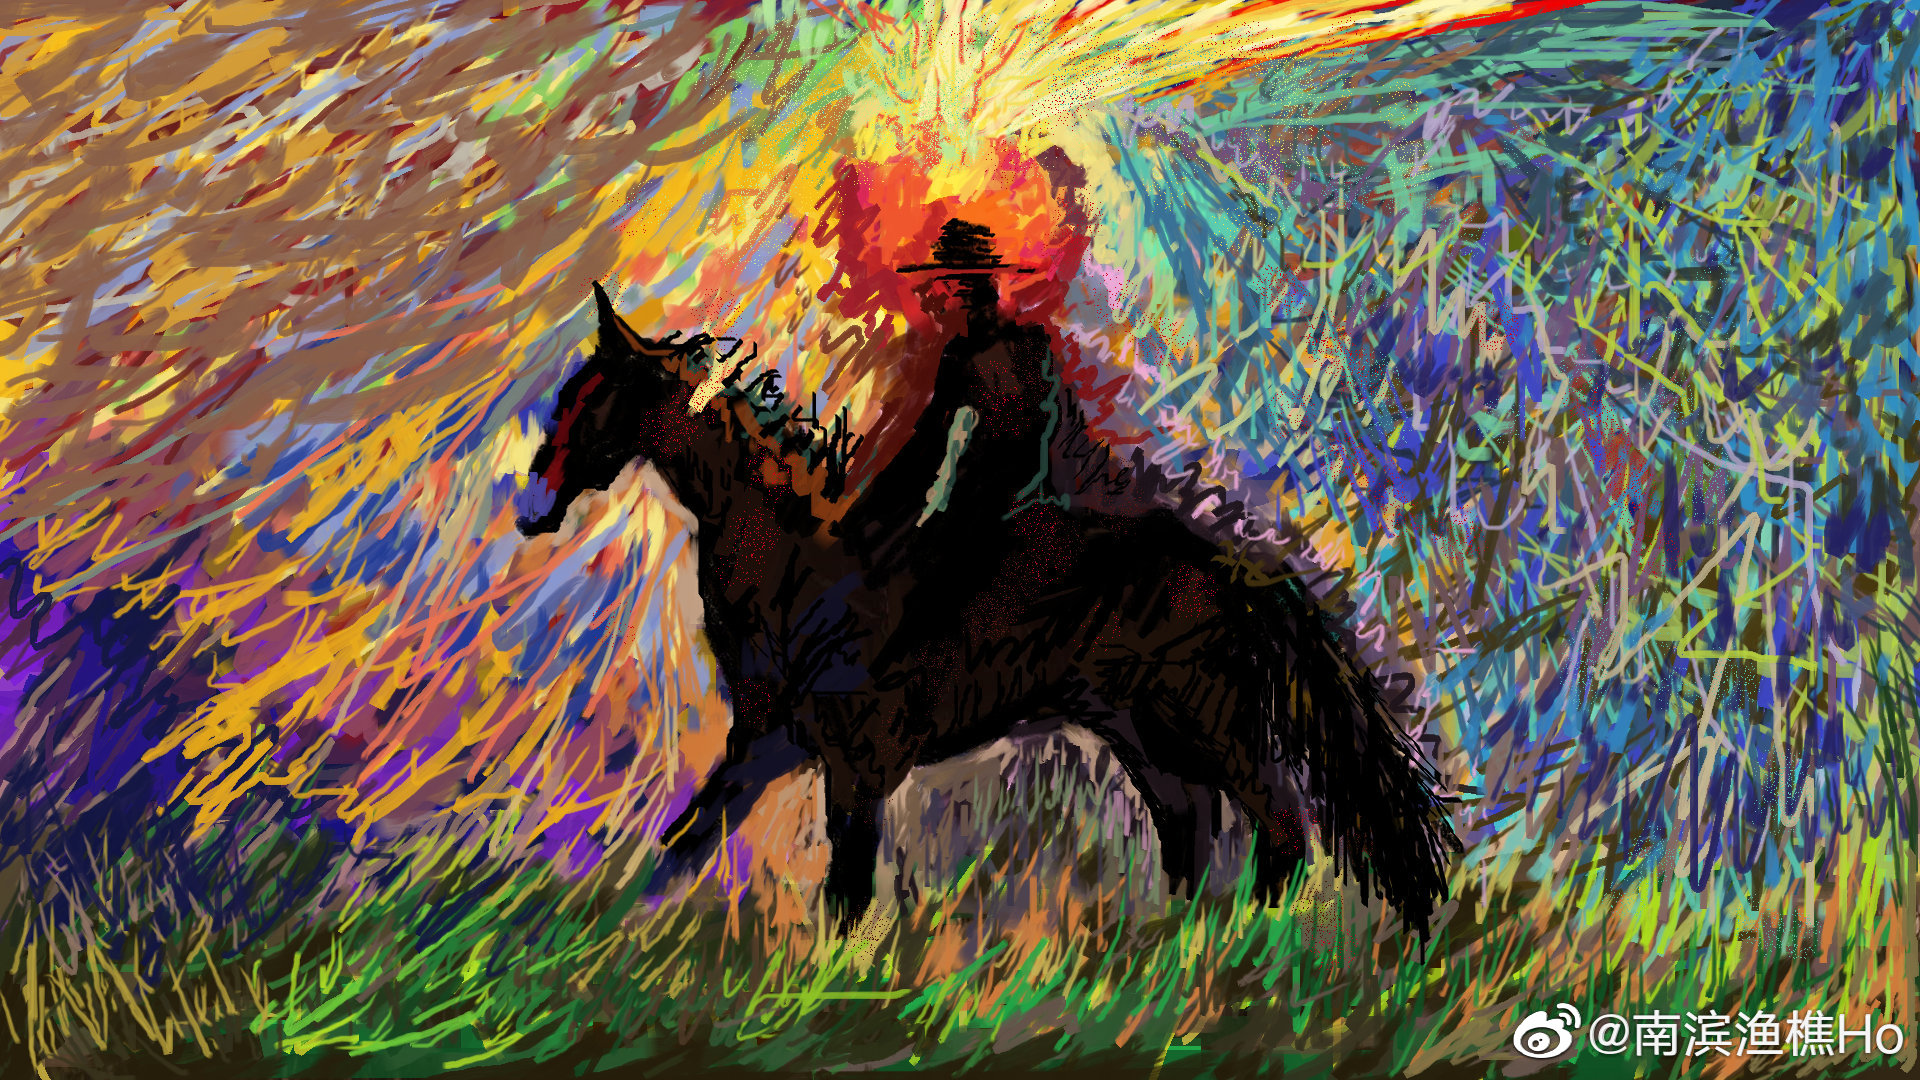 General 1920x1080 digital painting modern sun rays landscape nature painting artwork digital art watermarked cowboy horseback horse riding